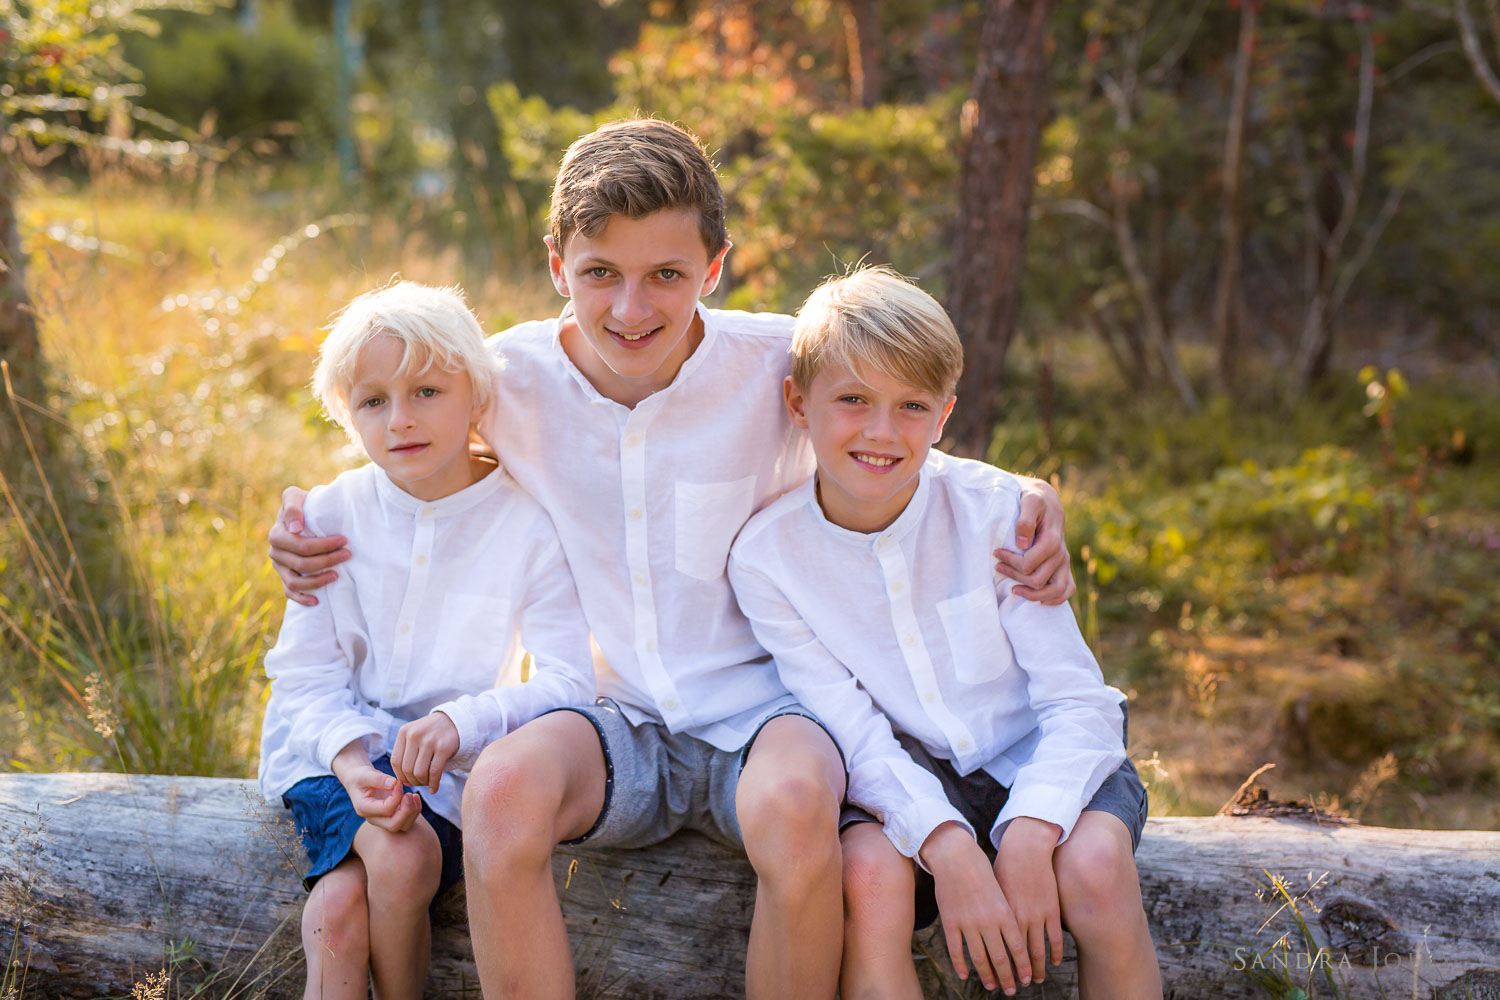 Brothers-hugging-by-bra-Stockholm-familjefotograf-Sandra-Jolly.jpg